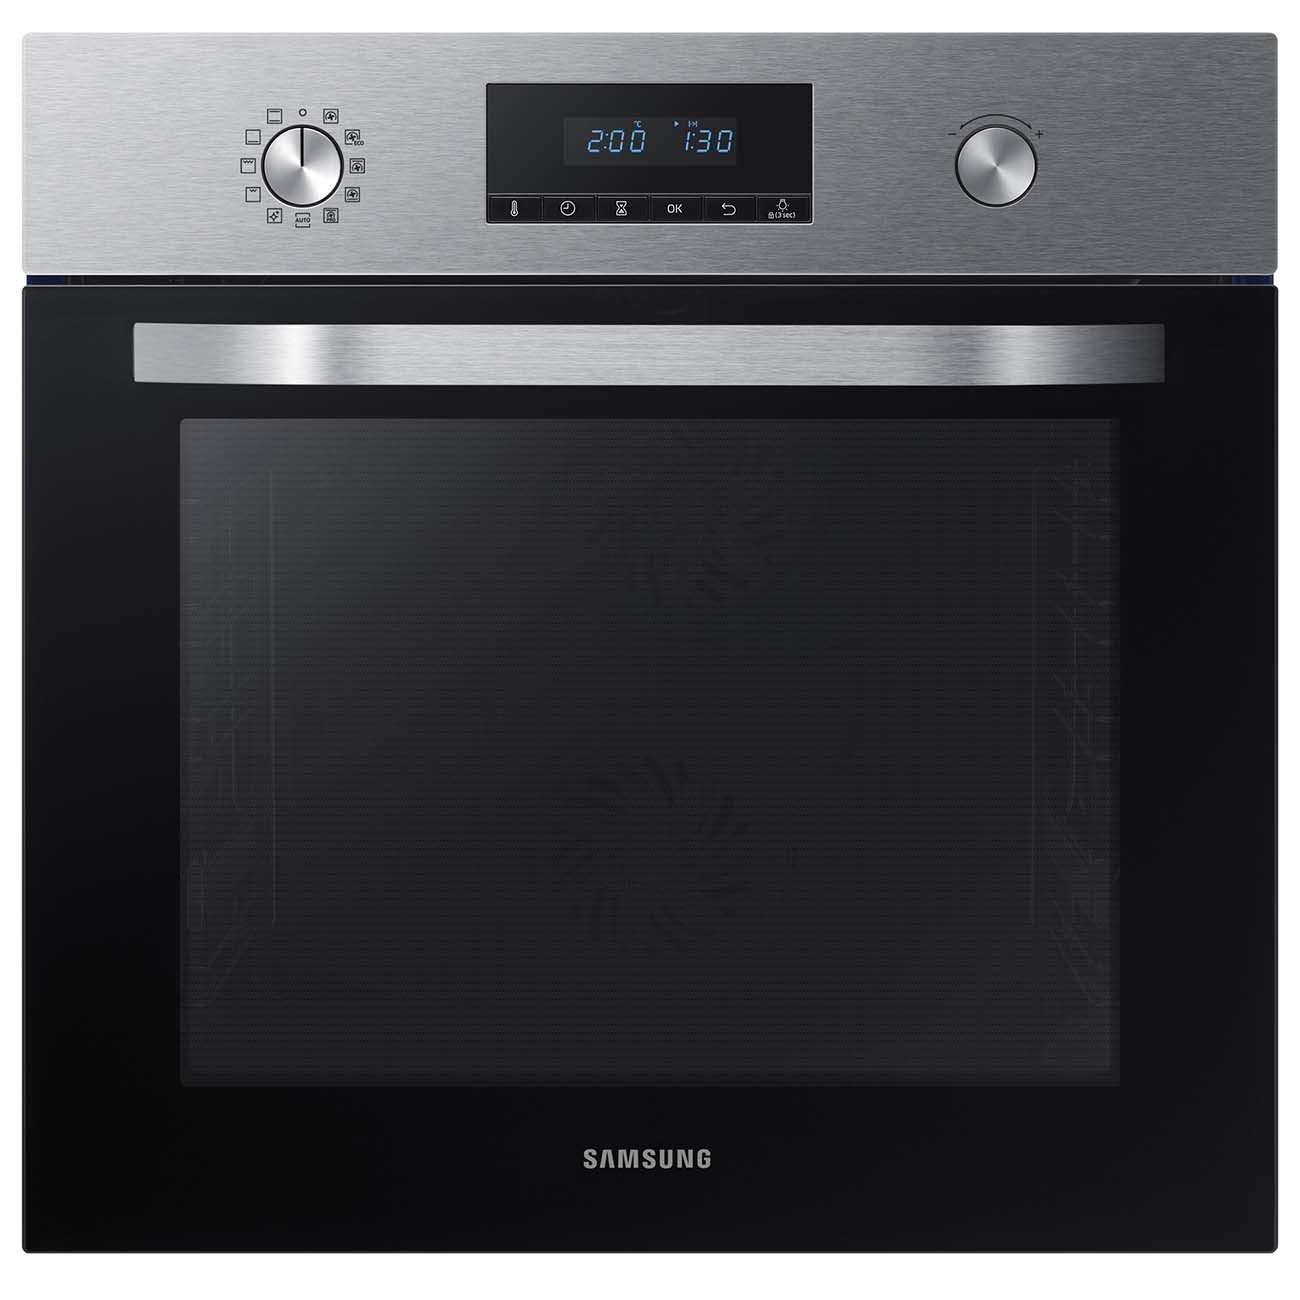 Samsung steam oven фото 15